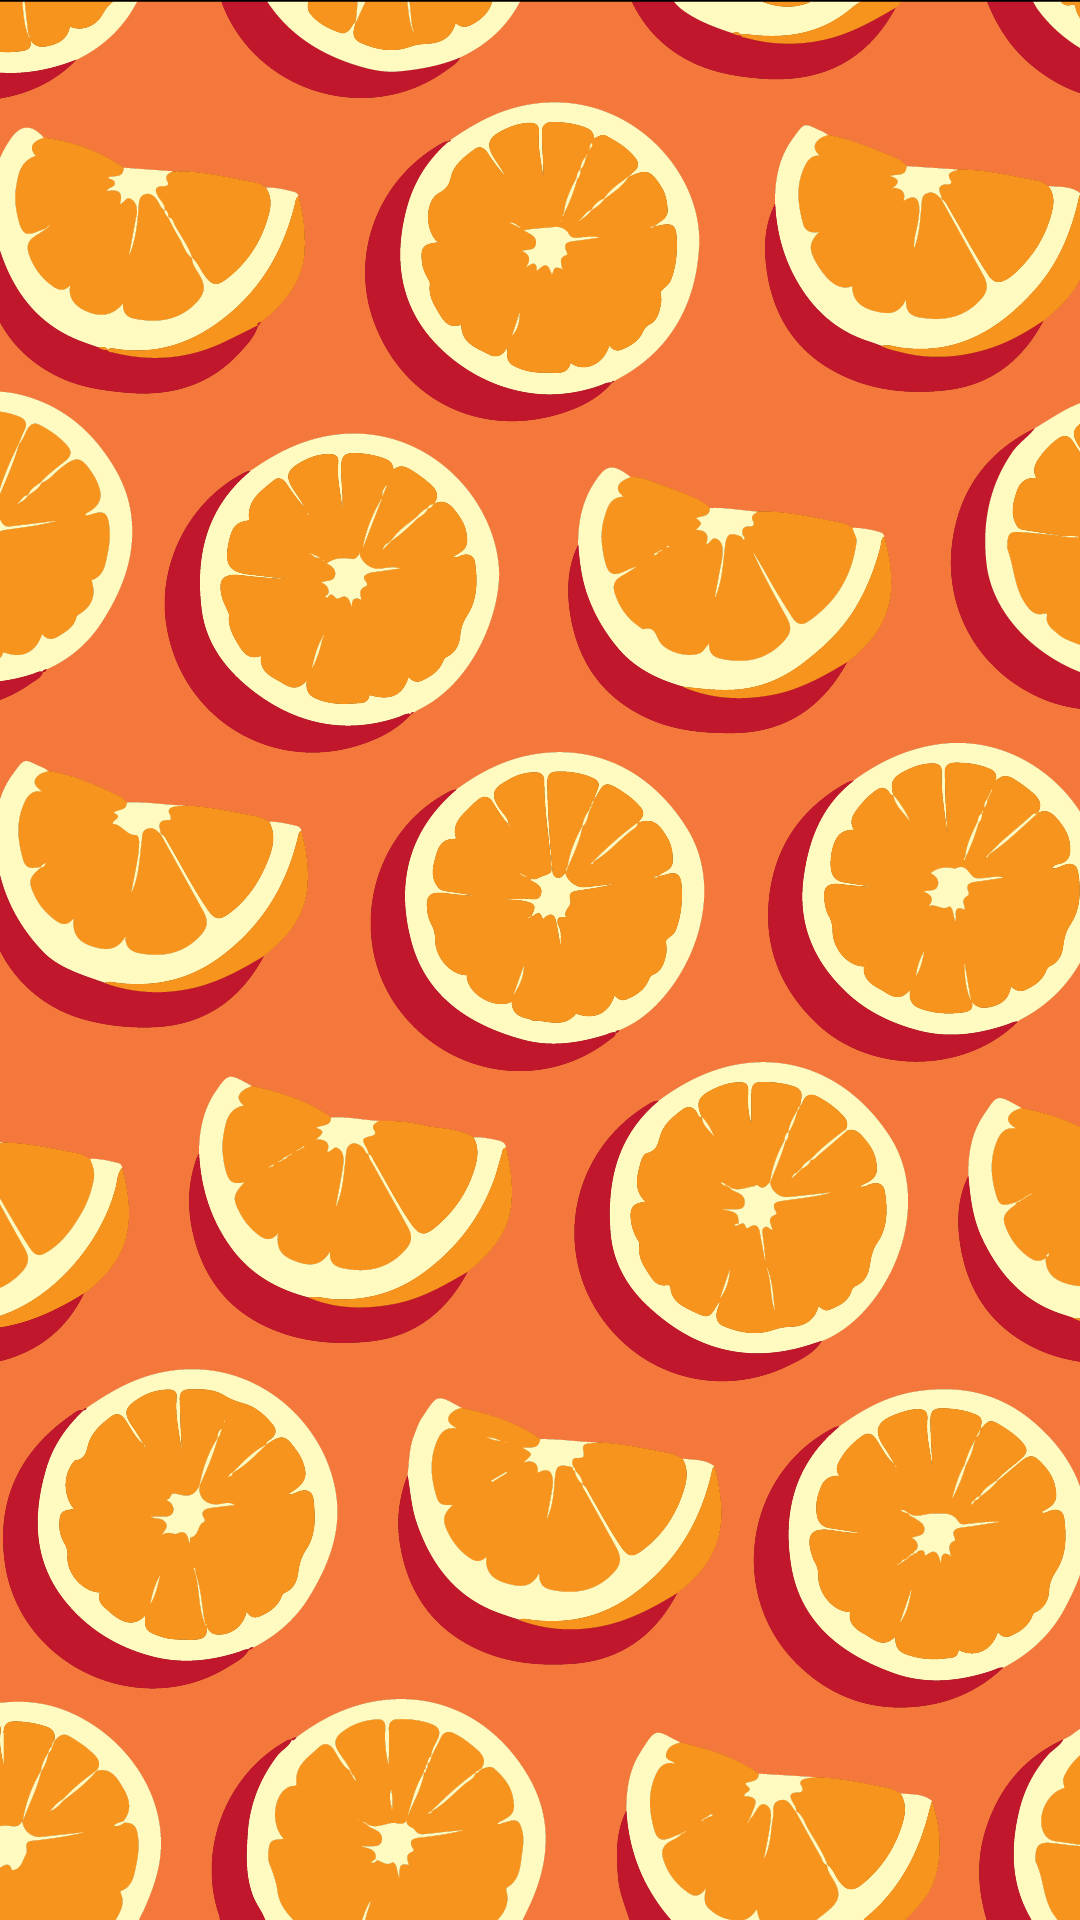 100+] Light Orange Background s | Wallpapers.com